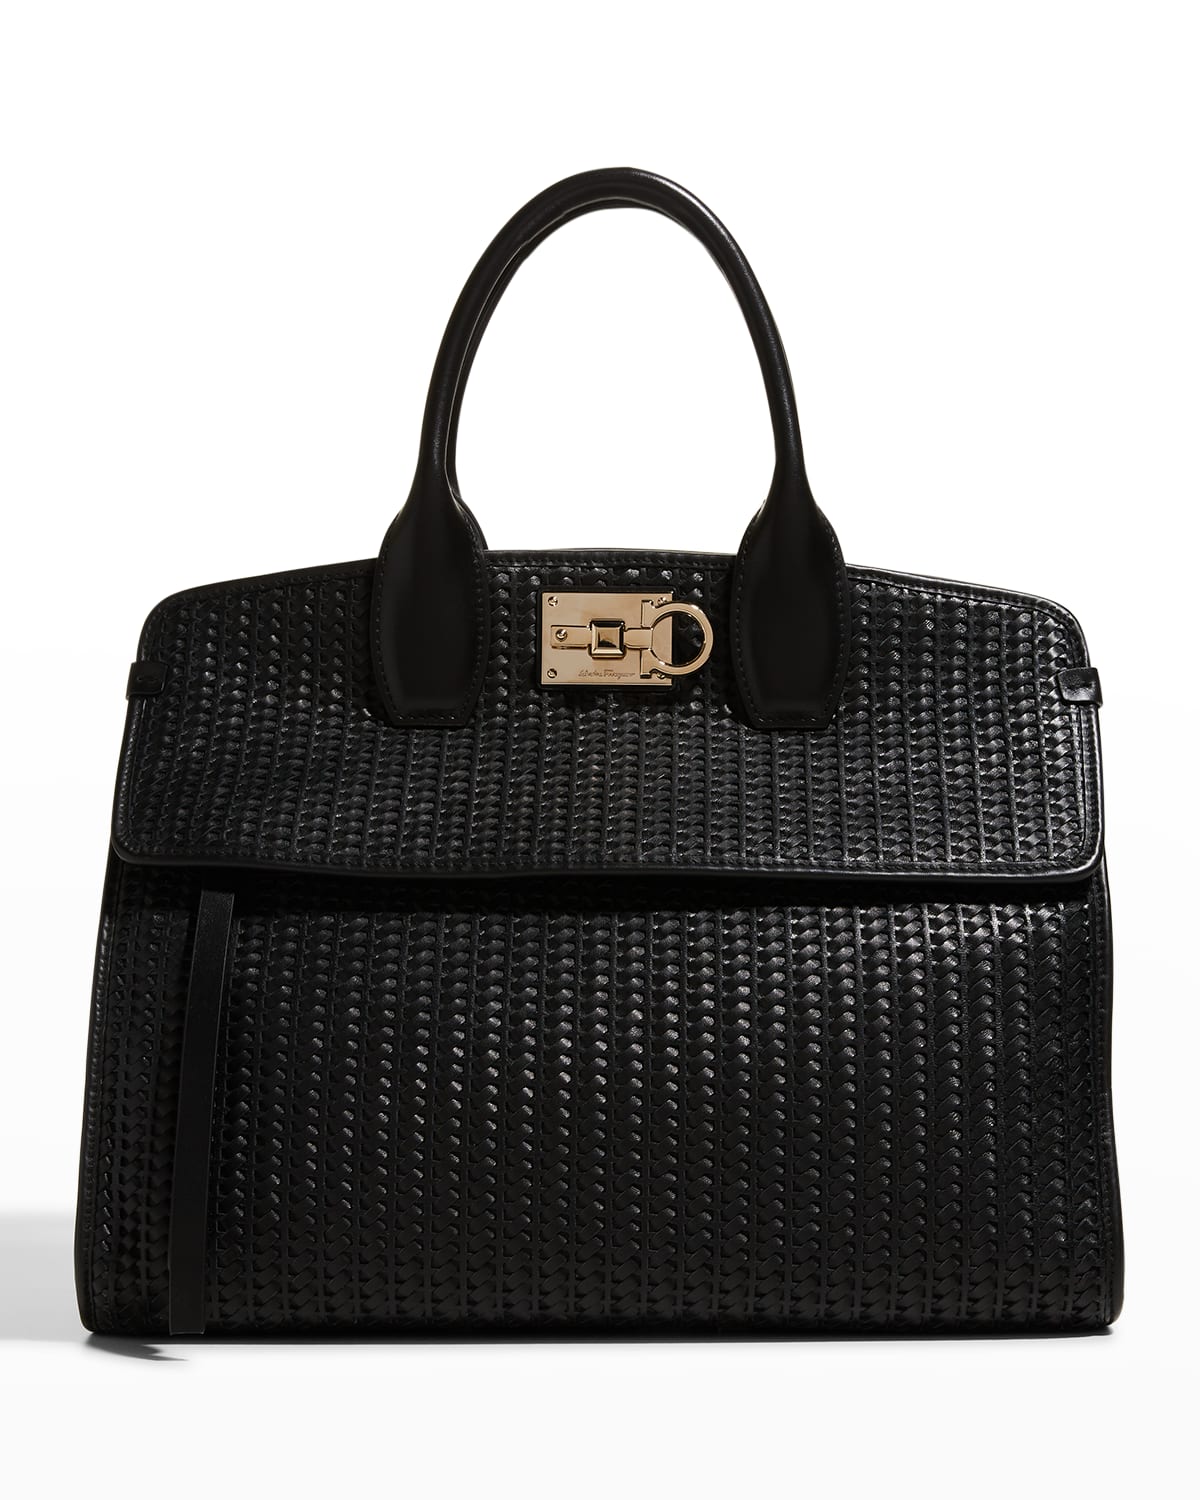 Woven Leather Bag | Neiman Marcus